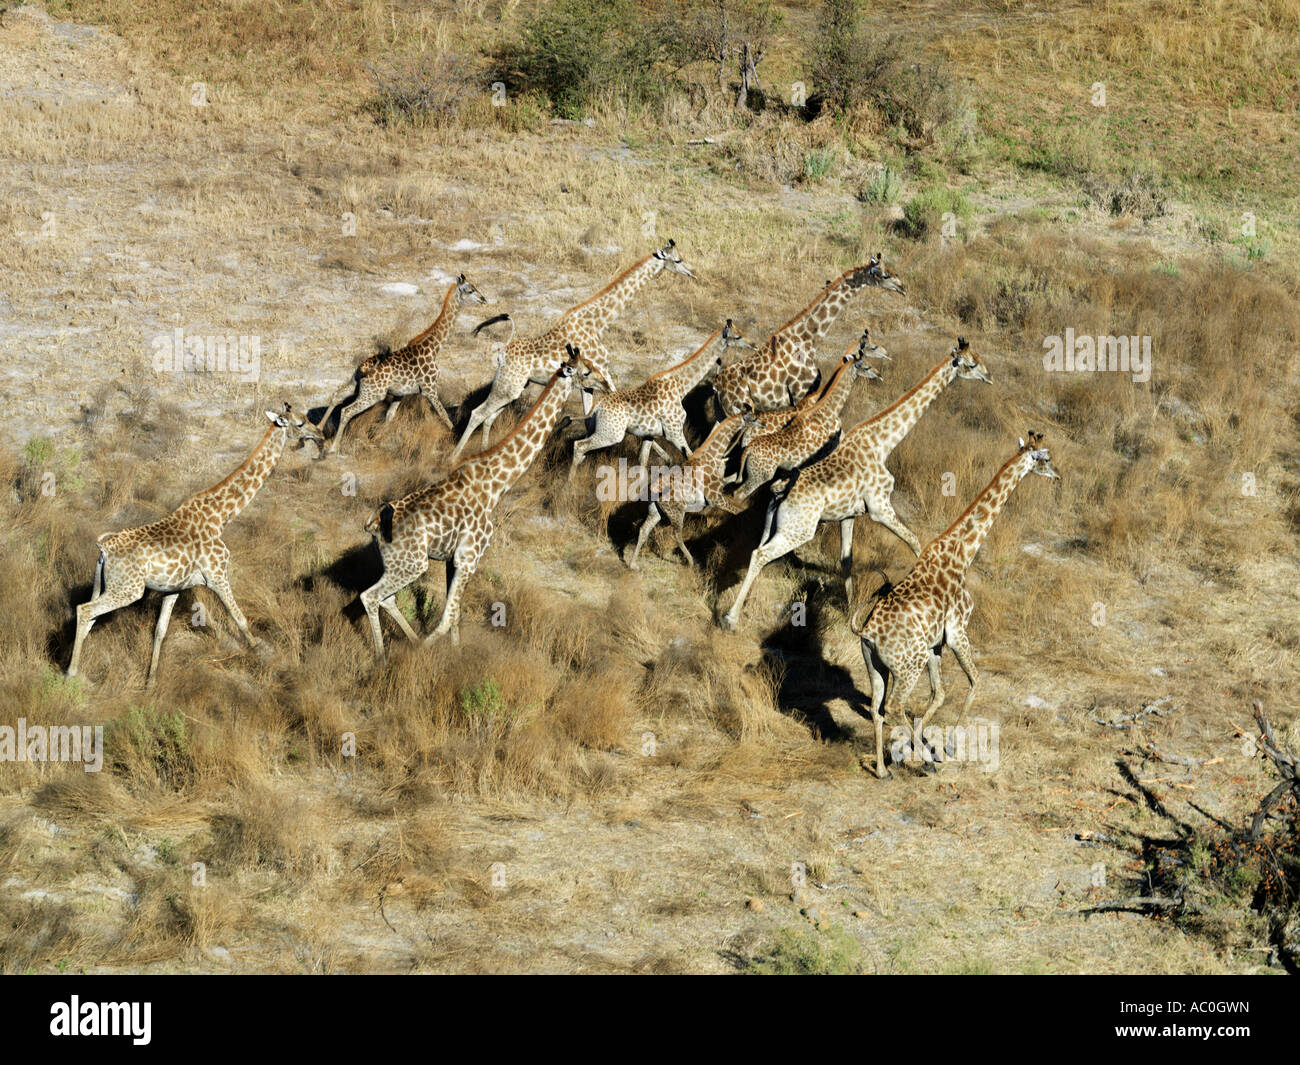 A herd of giraffes cross a dry flood plain in the Okavango Delta Stock Photo